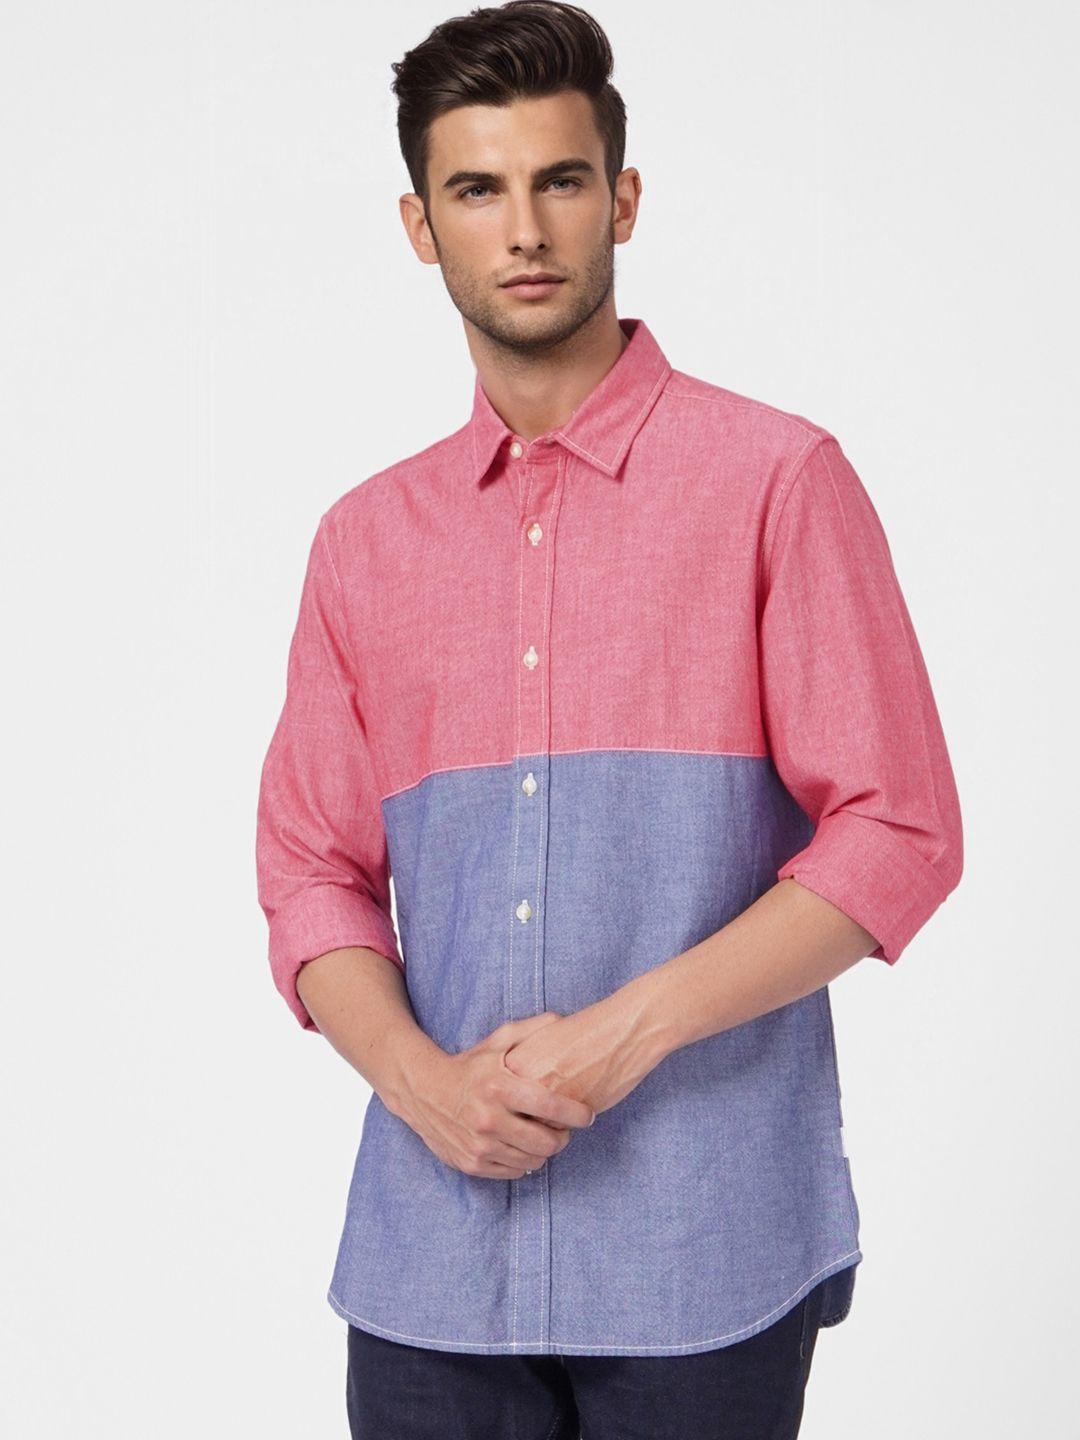 jack & jones men coral red & blue colourblocked slim fit pure cotton casual shirt